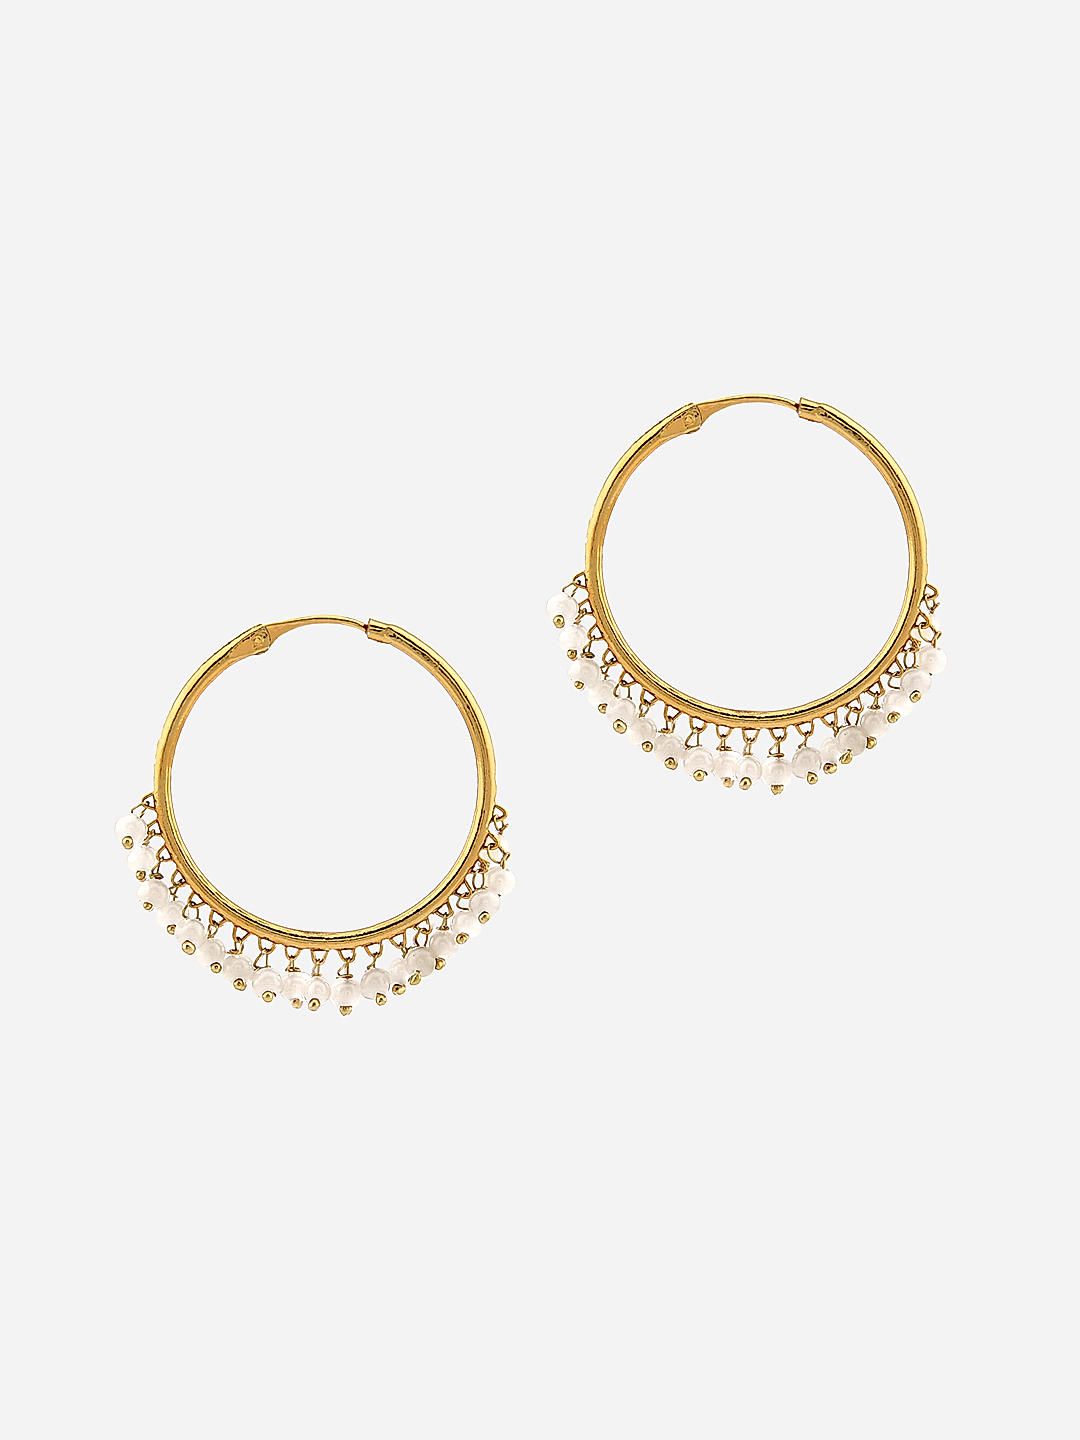 Gold Stud Earrings (4.160 Grams) in 22Kt Yellow Gold | Mohan Jewellery